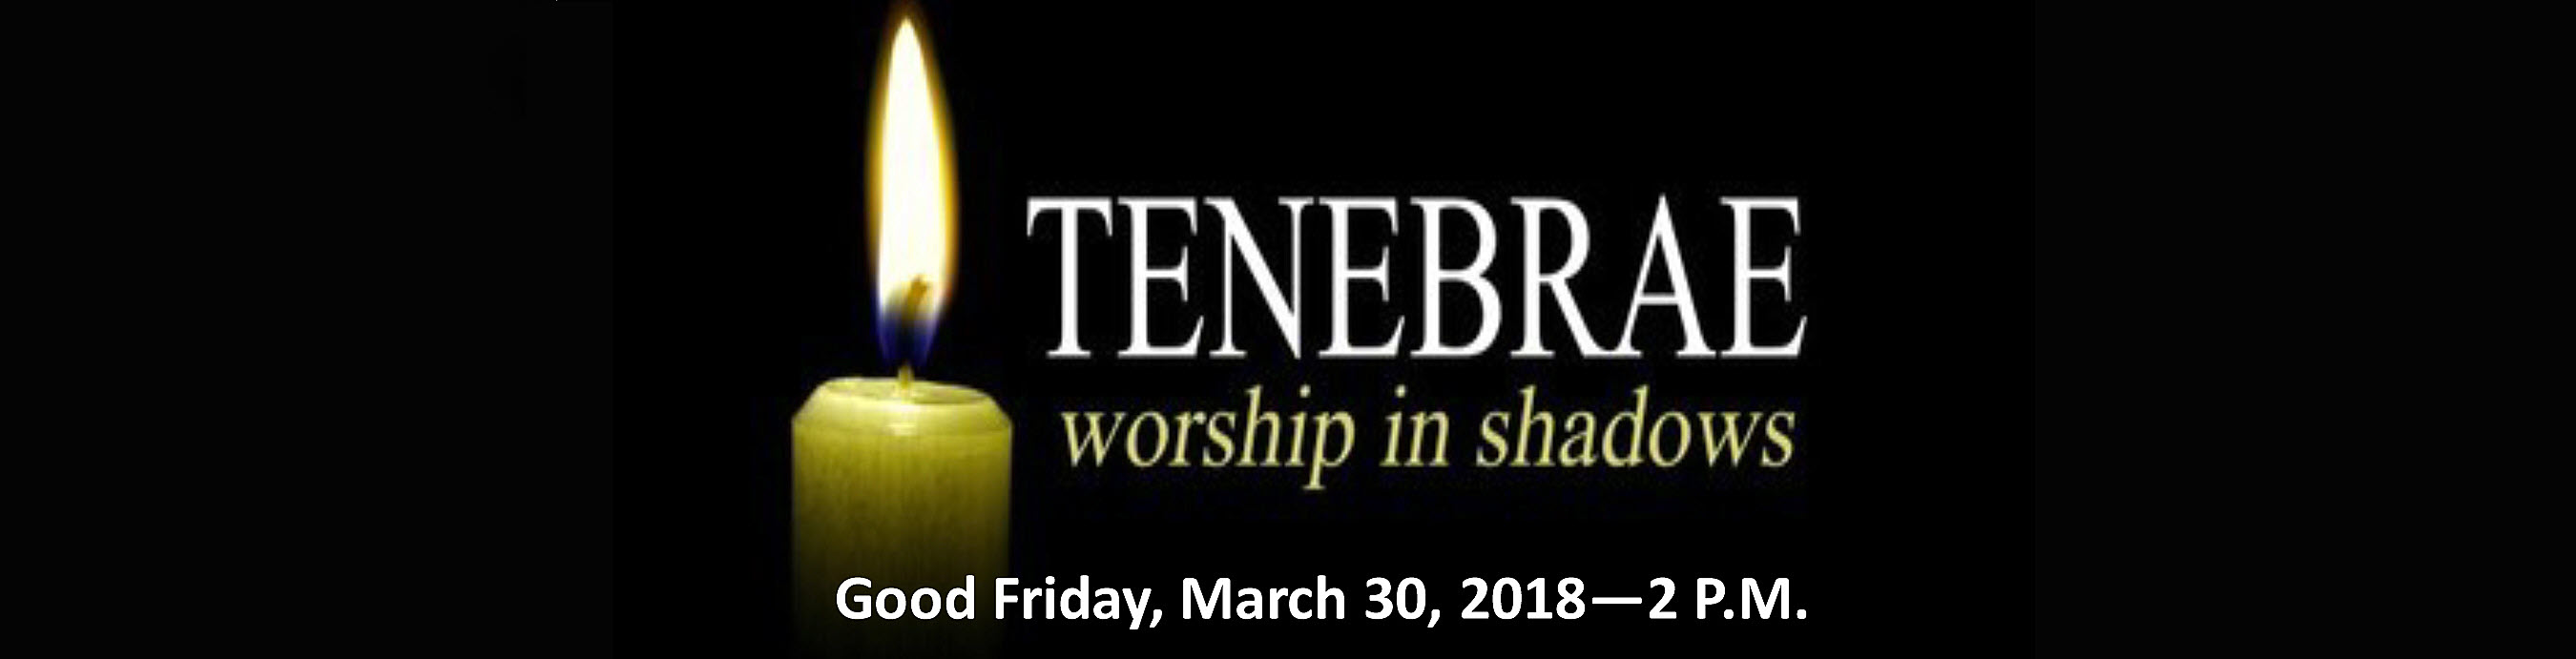 Tenebrae Service – Good Friday 2:00 p.m.